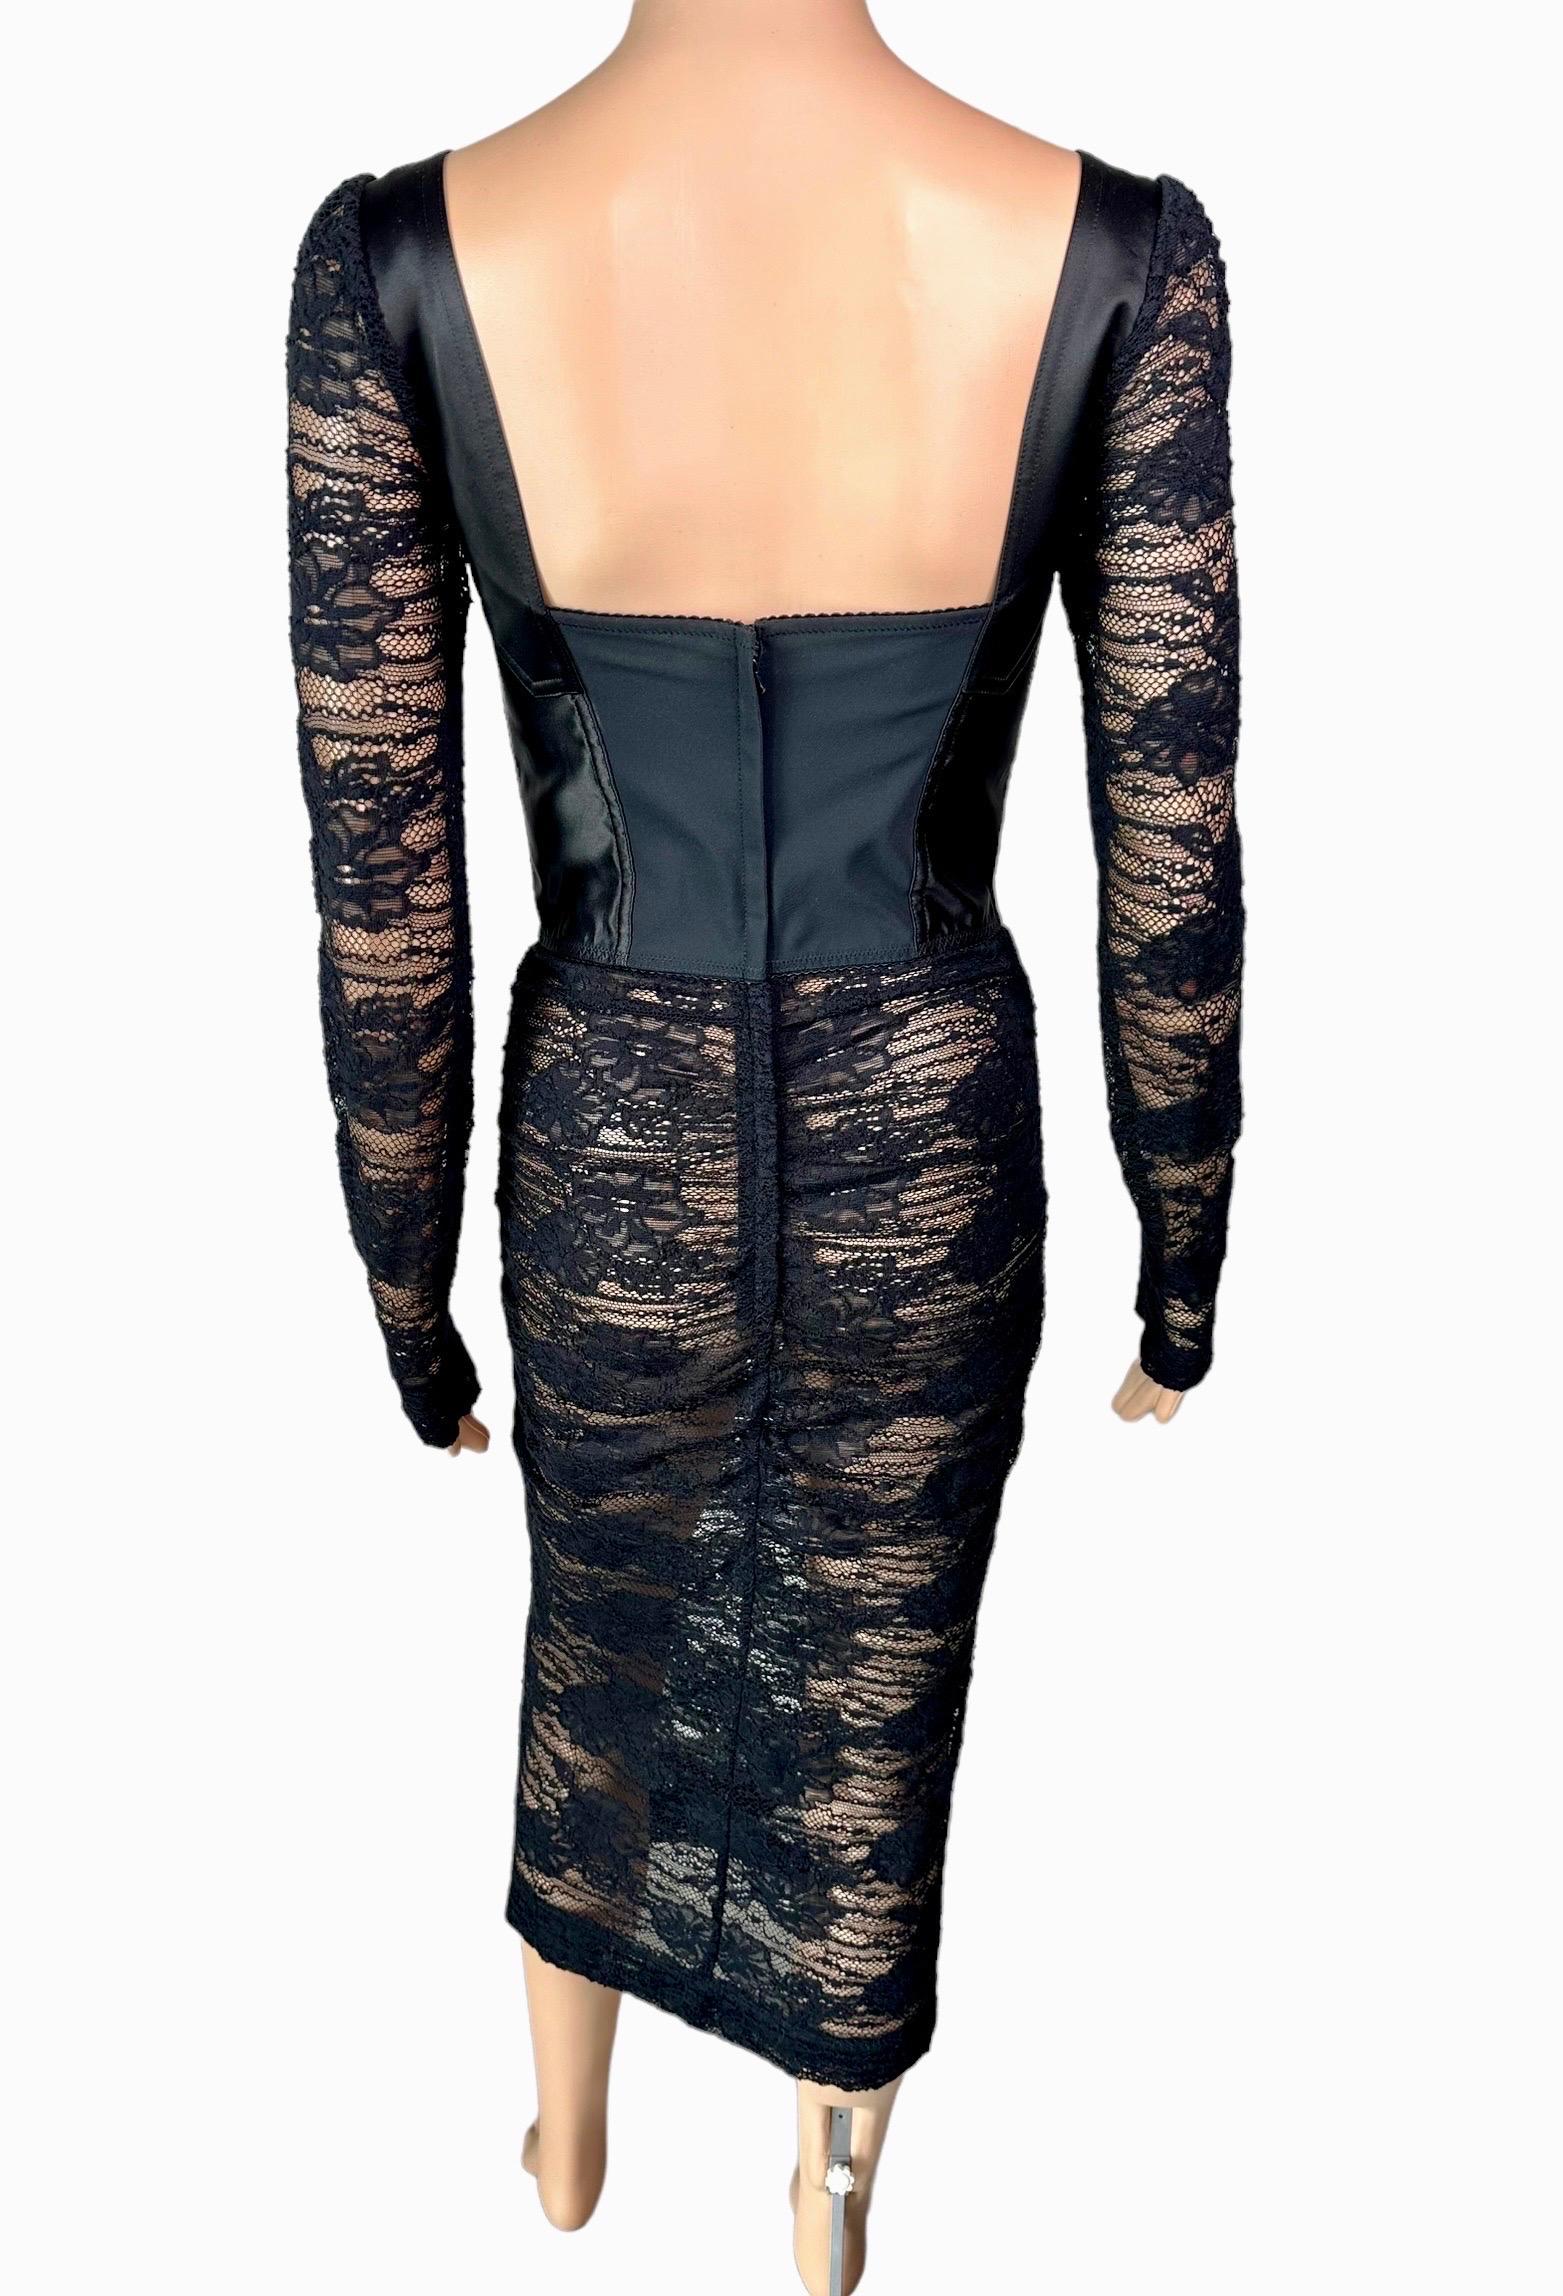 Dolce & Gabbana Bustier Corset Bra Sheer Lace Crochet Bodycon Black Midi Dress For Sale 2